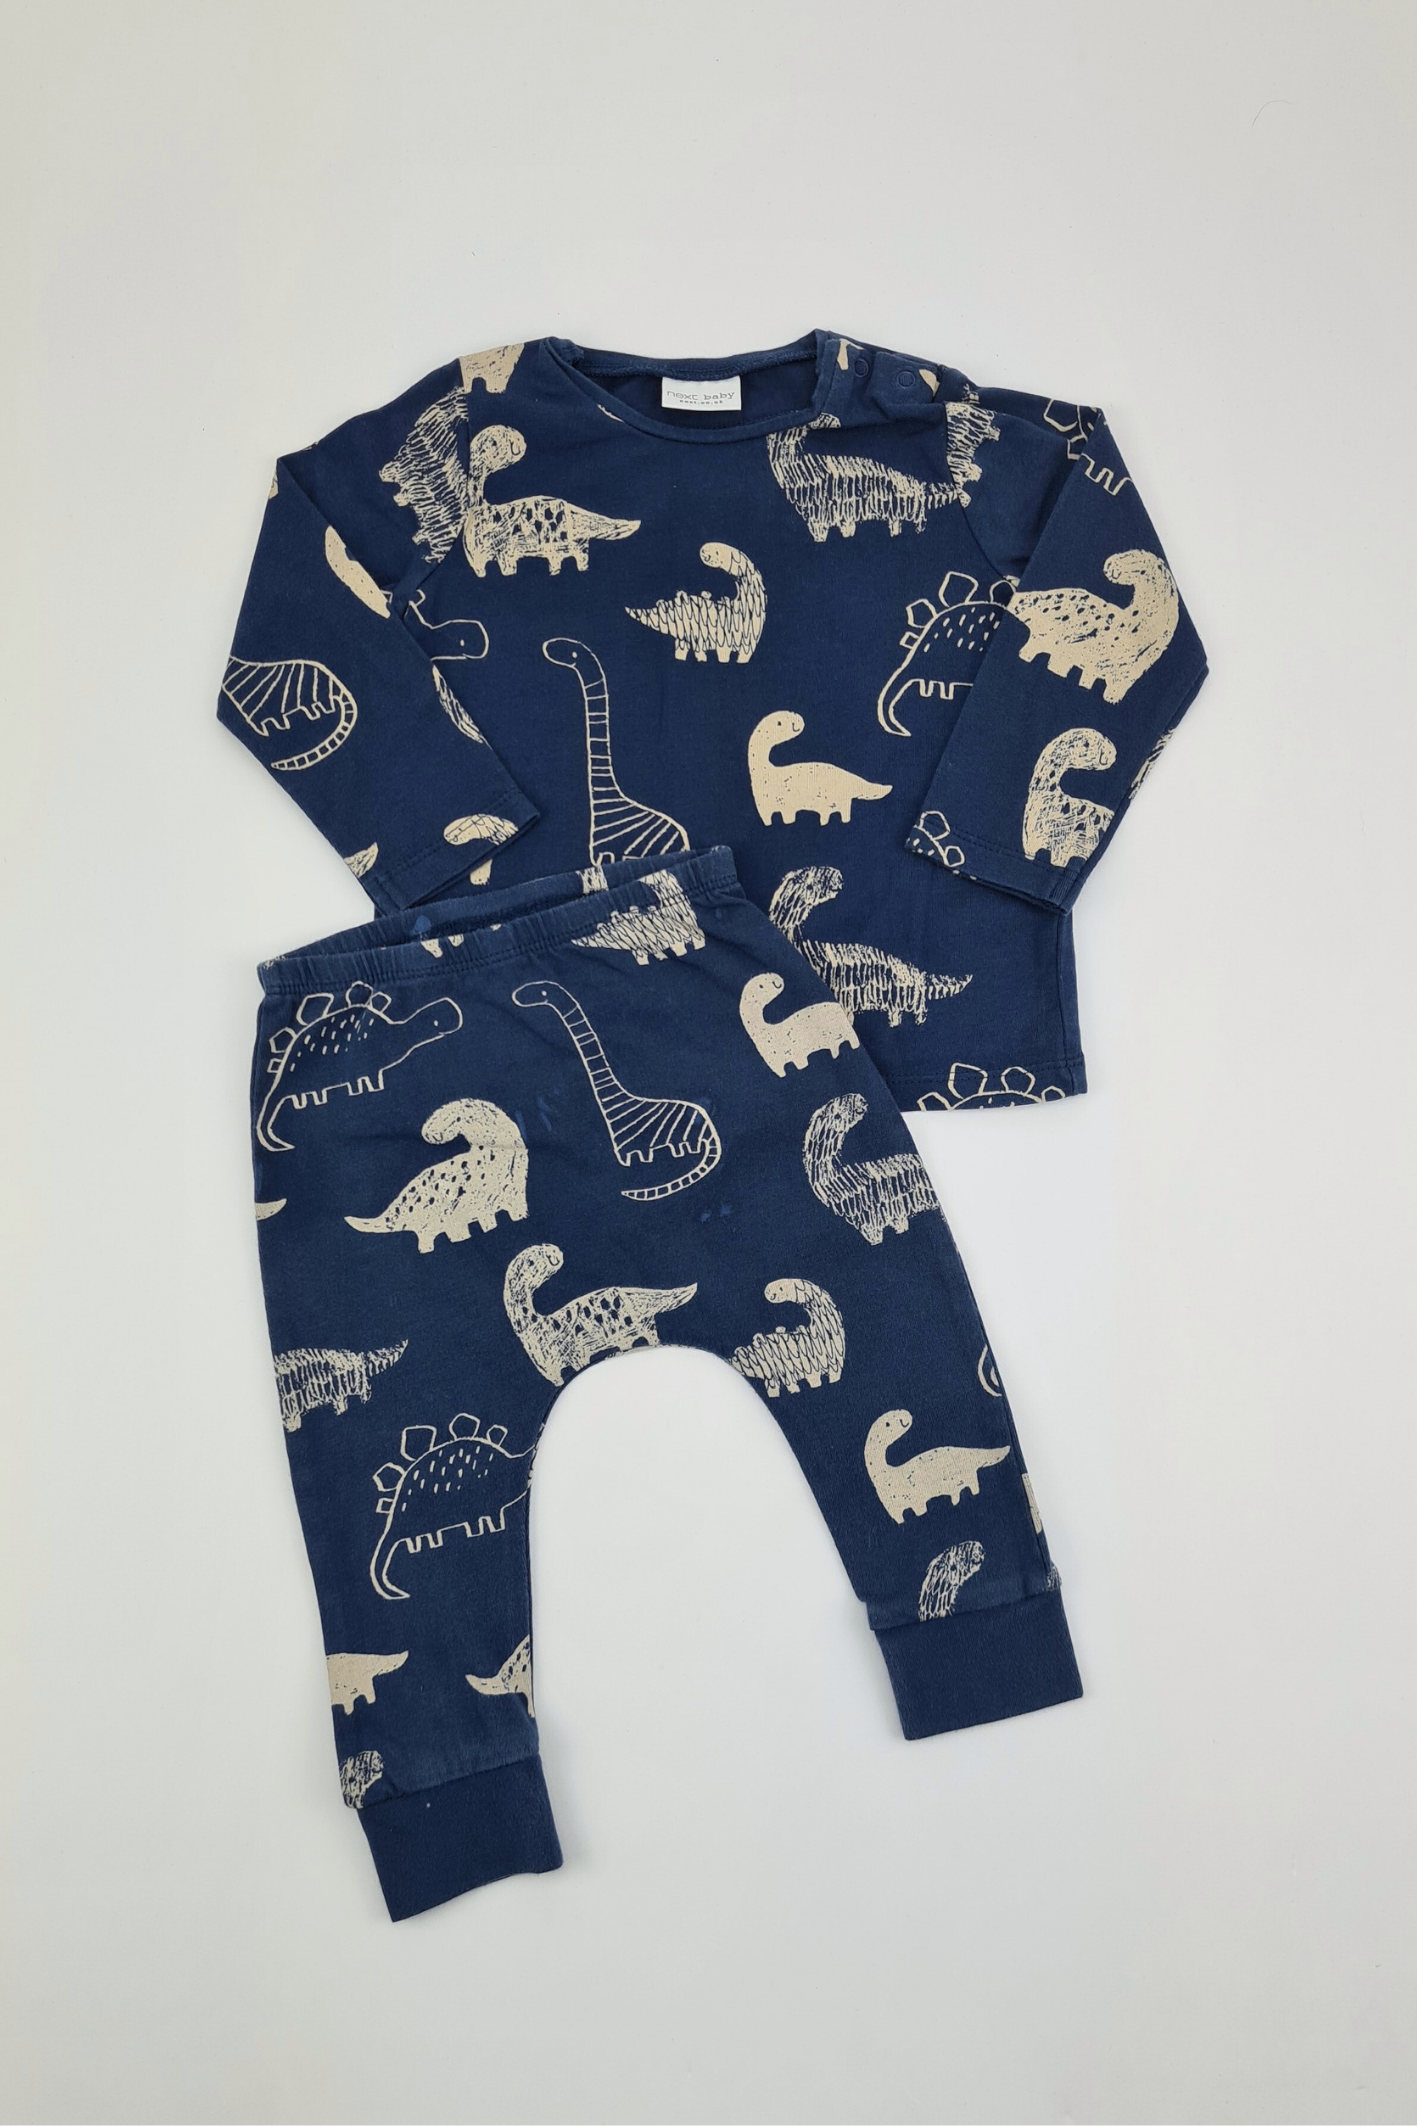 6-9m - Dinosaur Print Outfit (Next)